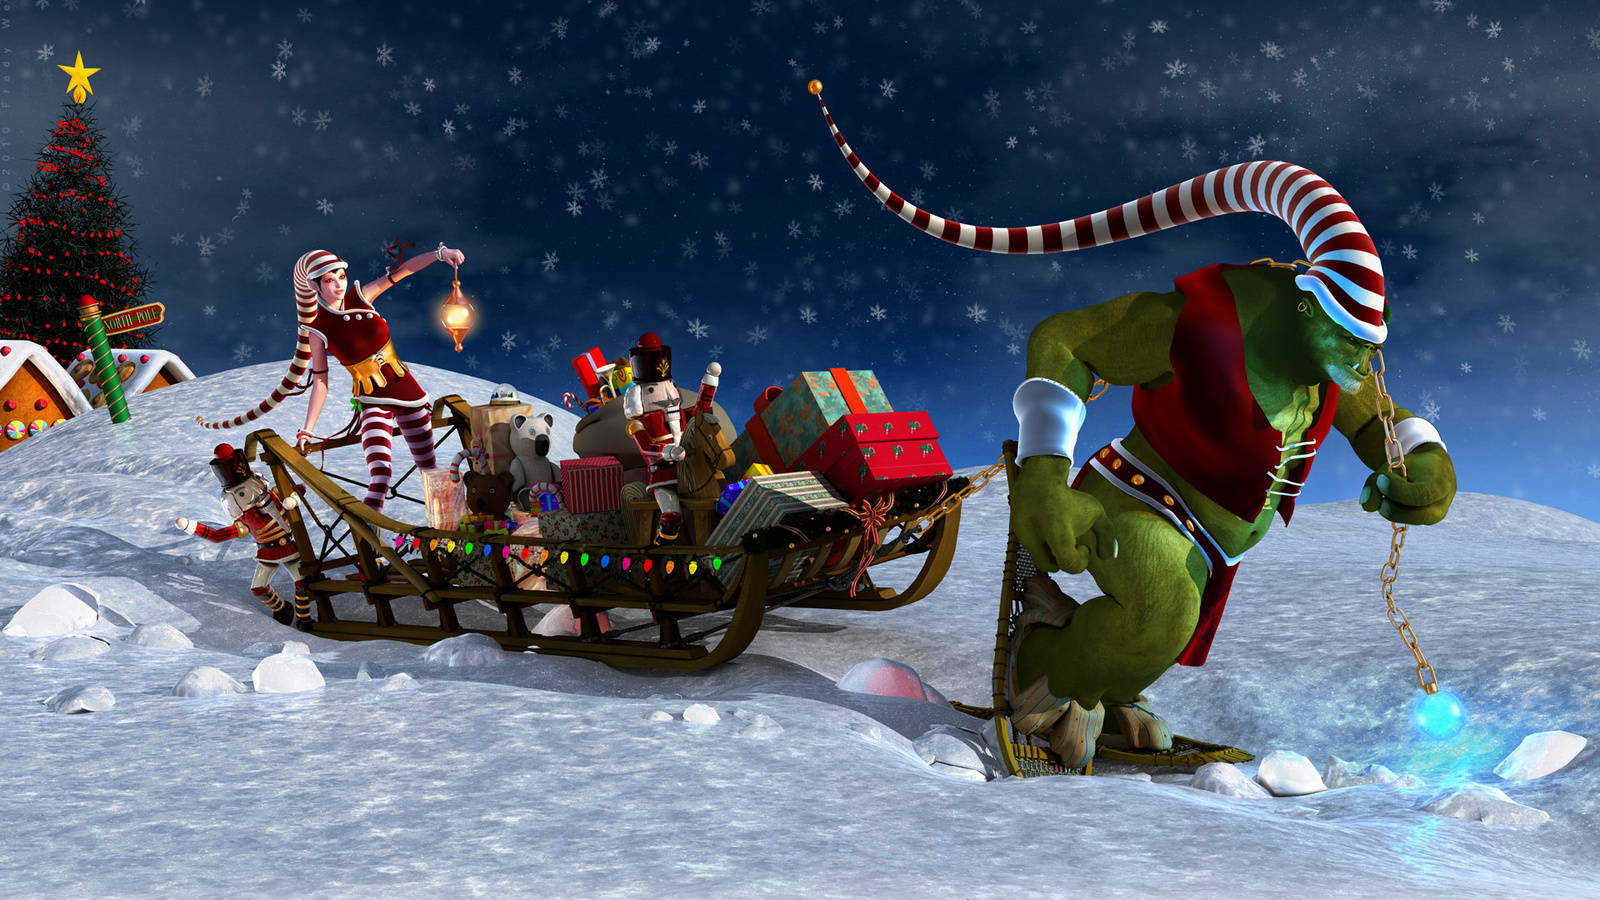 HD Anime Wallpaper Sleigh Santa Christmas Tree Claus Gifts New